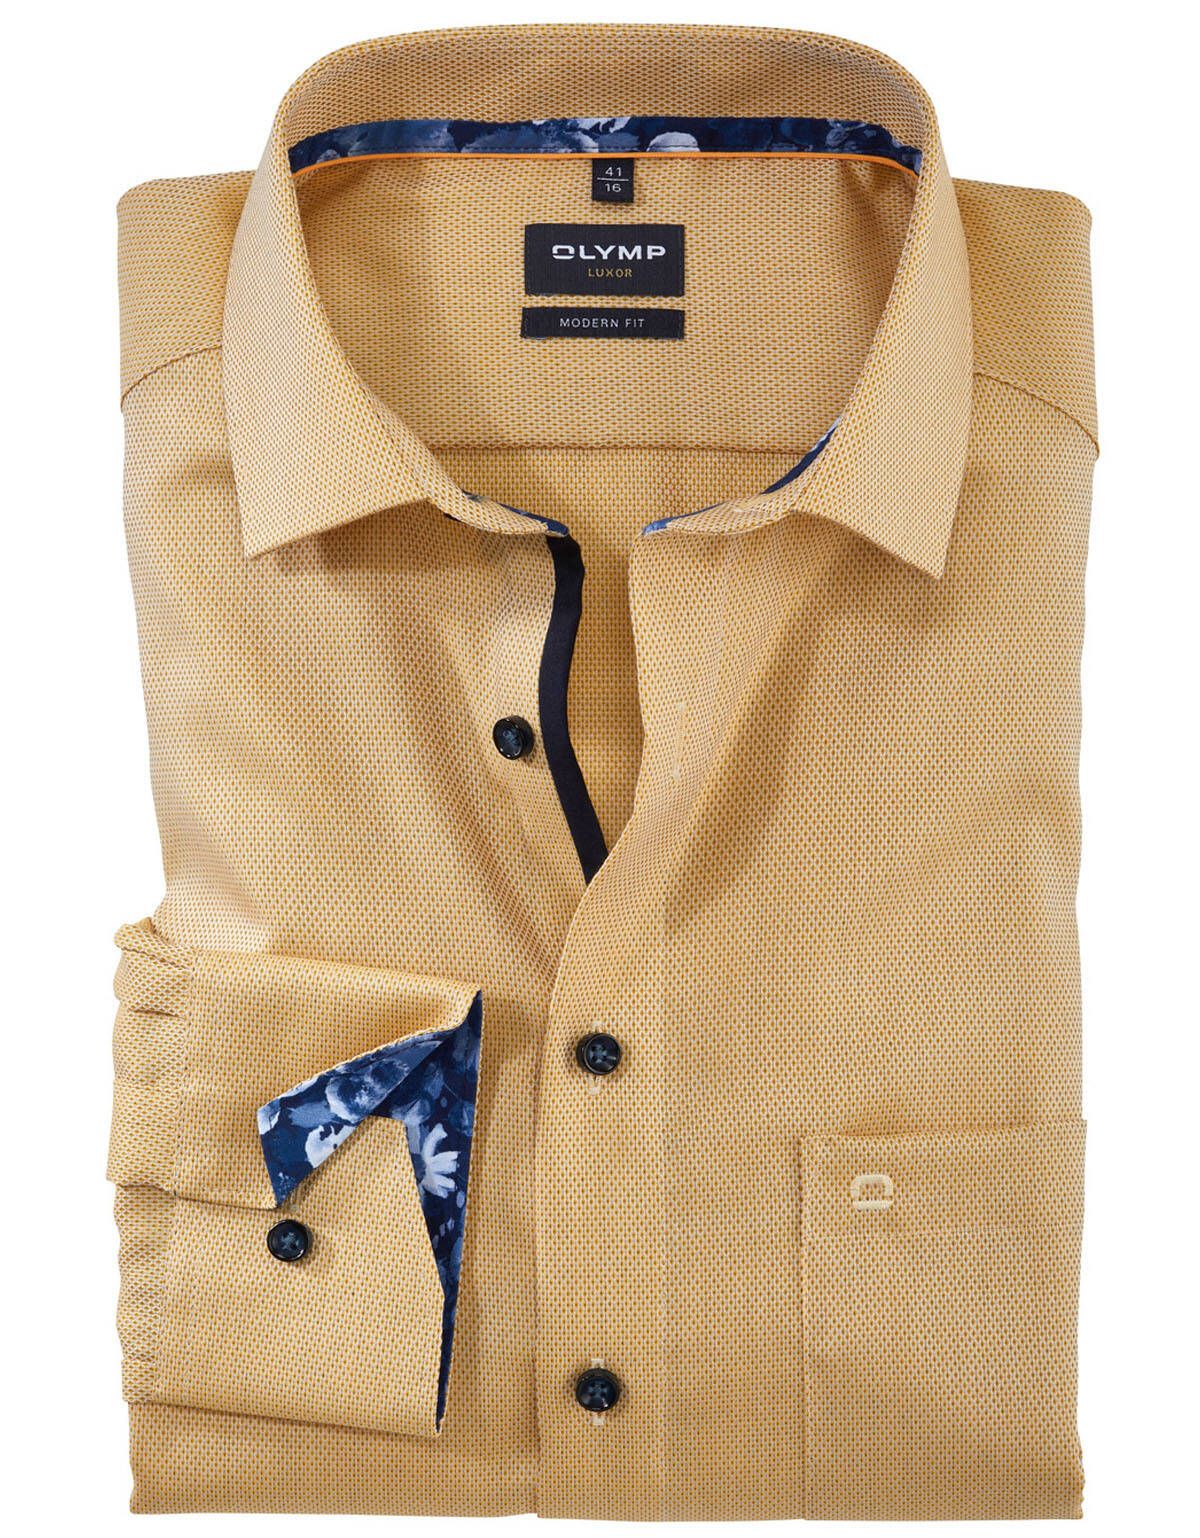 Рубашка классическая OLYMP Luxor, modern fit[Желтый]